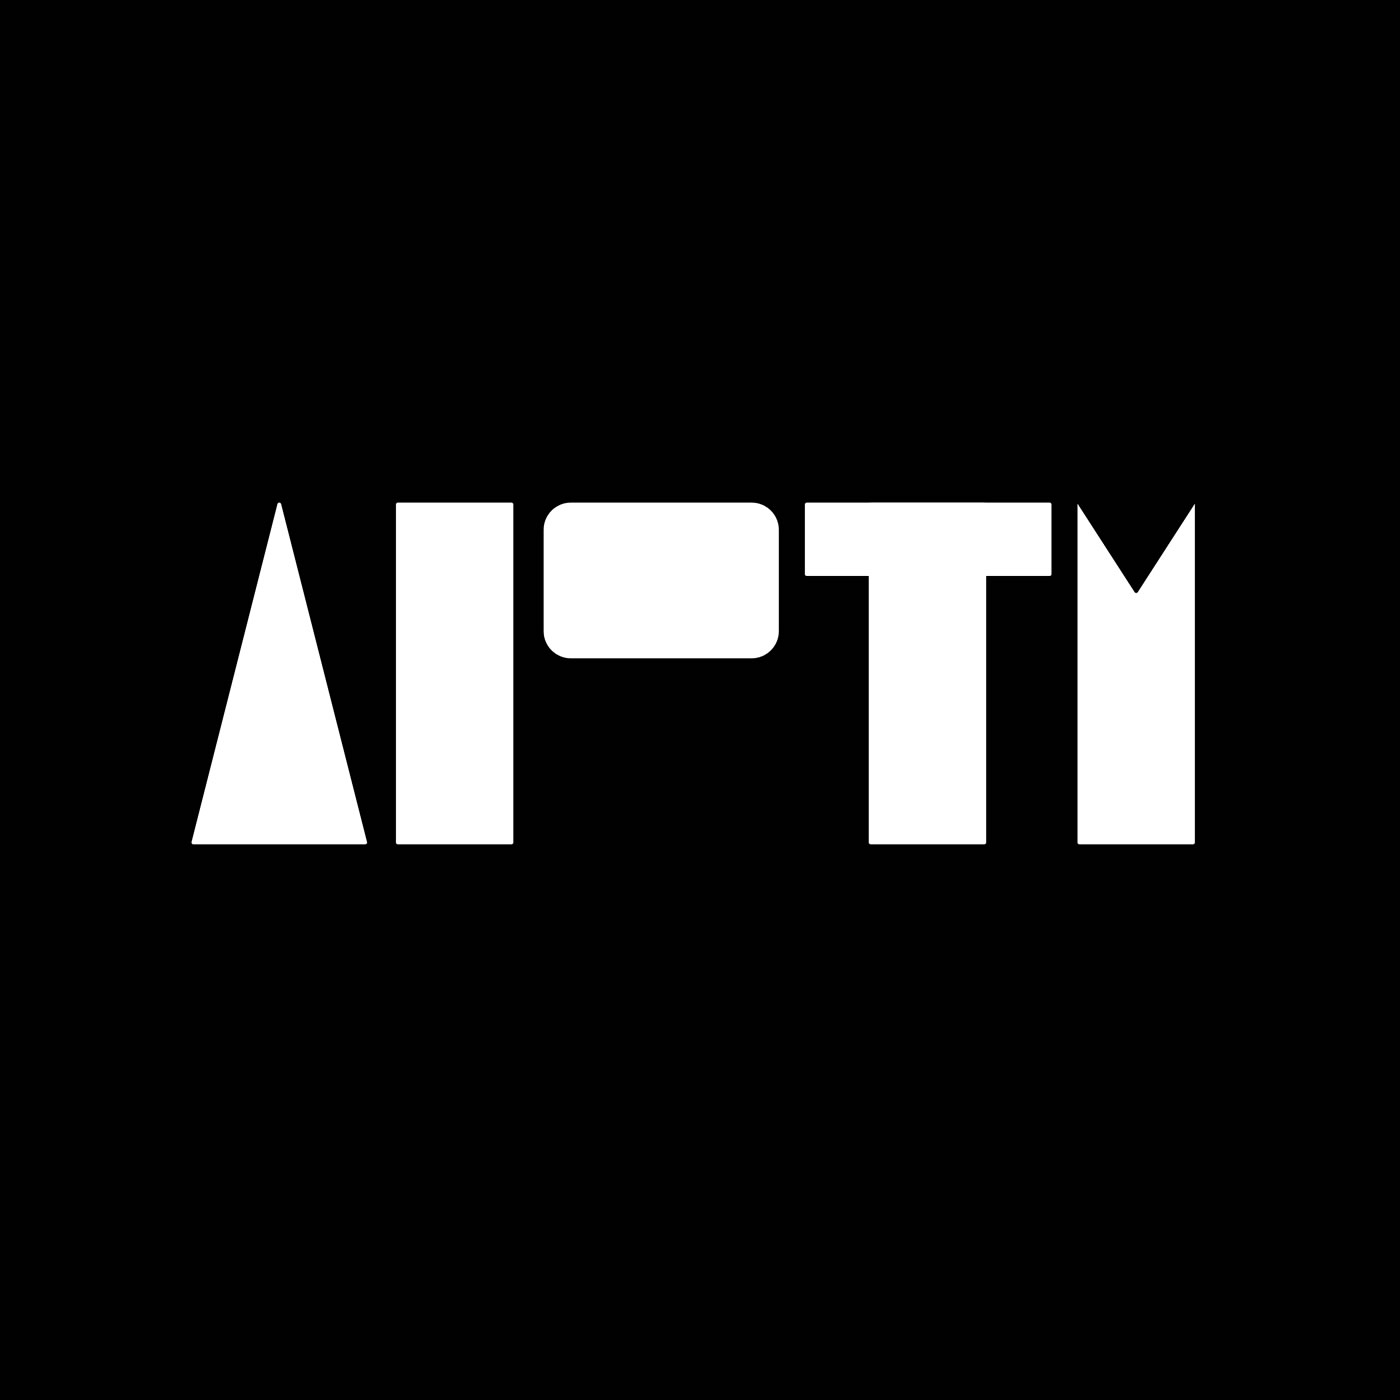 AIOTM - Video Series #4